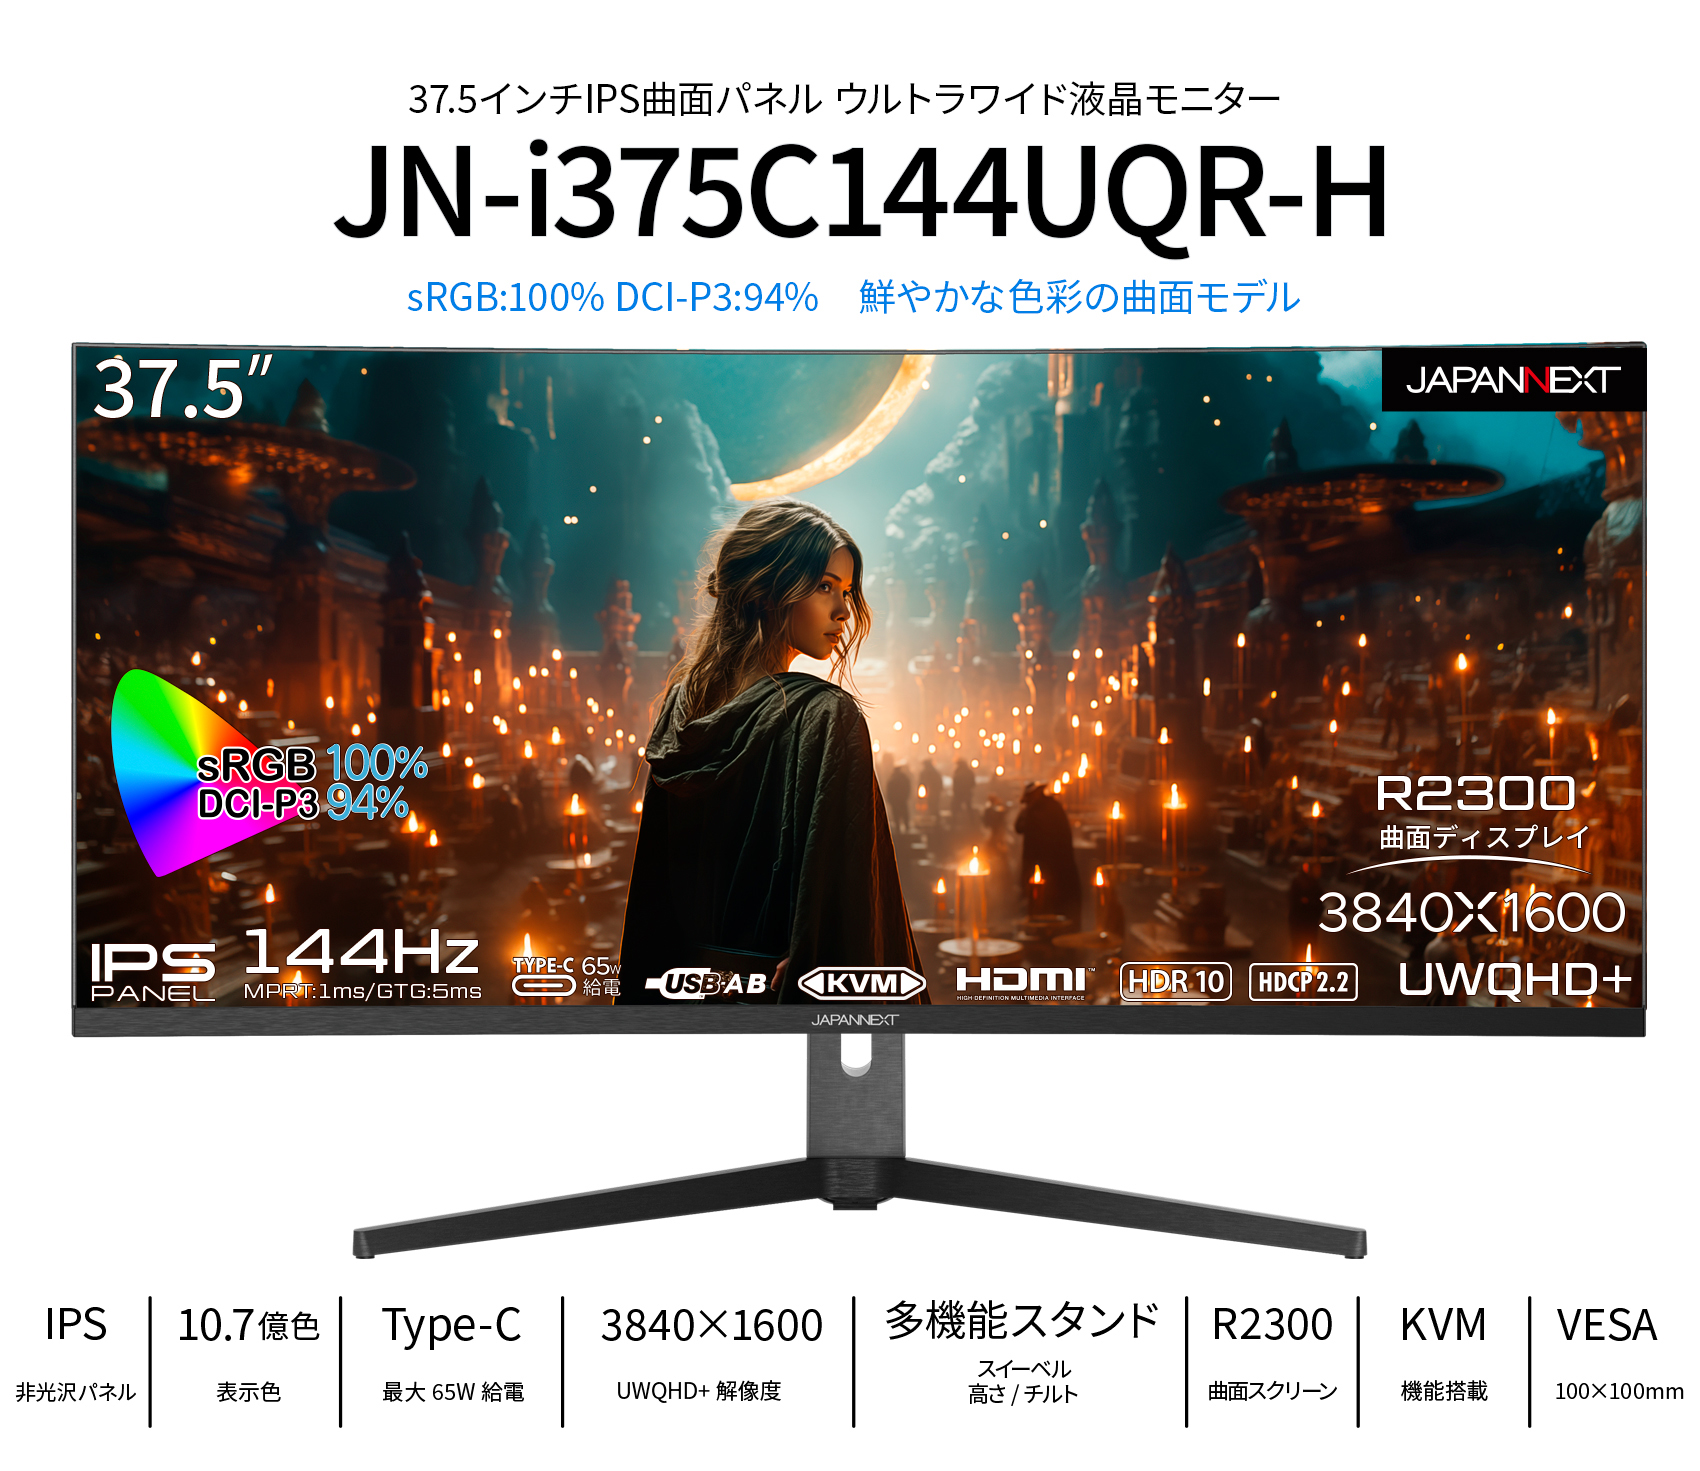 JAPANNEXT 37.5インチ曲面 IPSパネル UWQHD+(3840 x 1600)解像度 